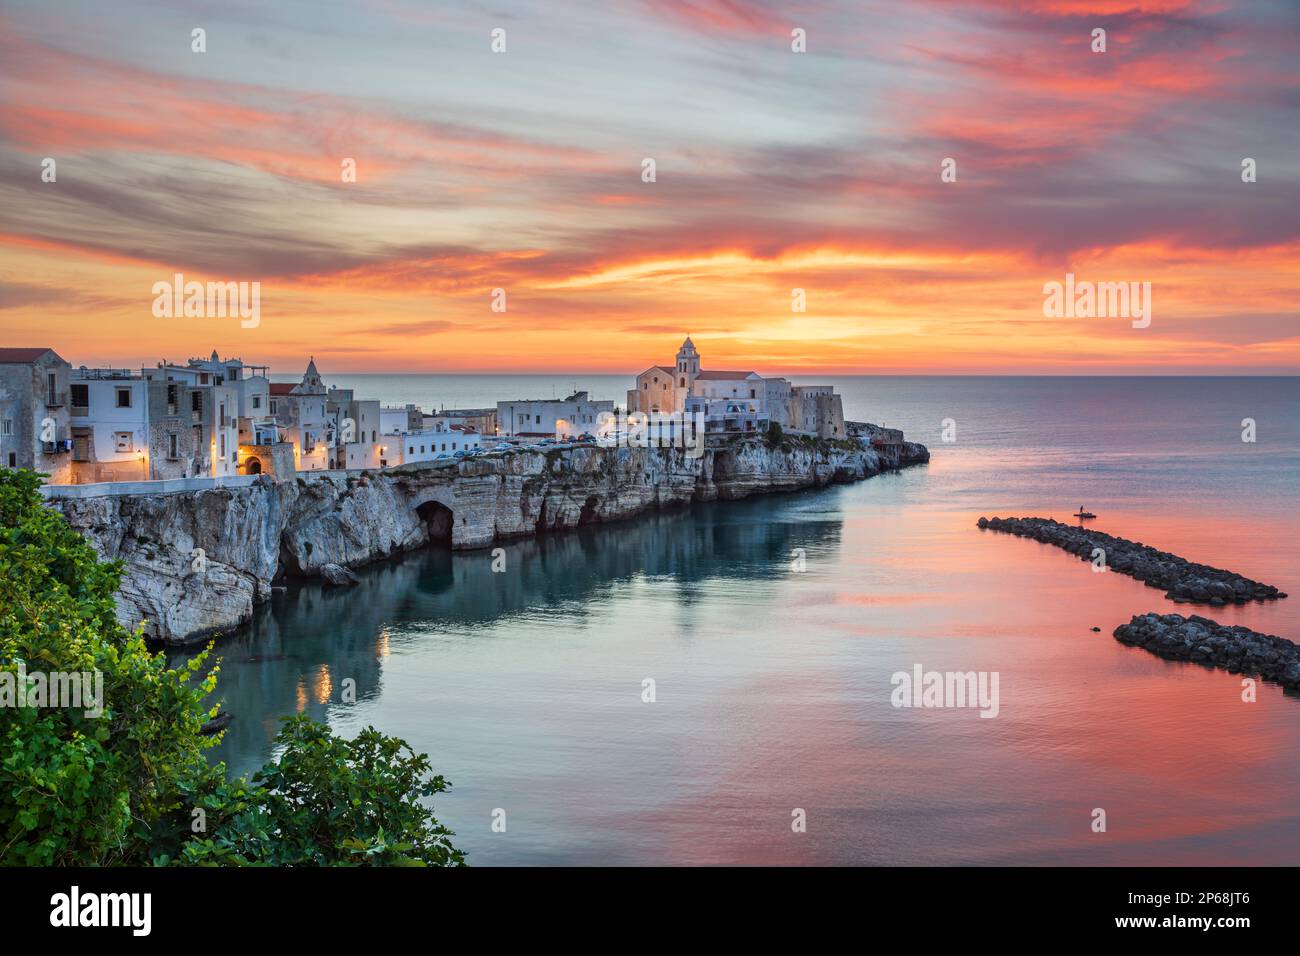 The old town on the promontory at sunrise, Vieste, Gargano peninsula, Foggia province, Puglia, Italy, Europe Stock Photo